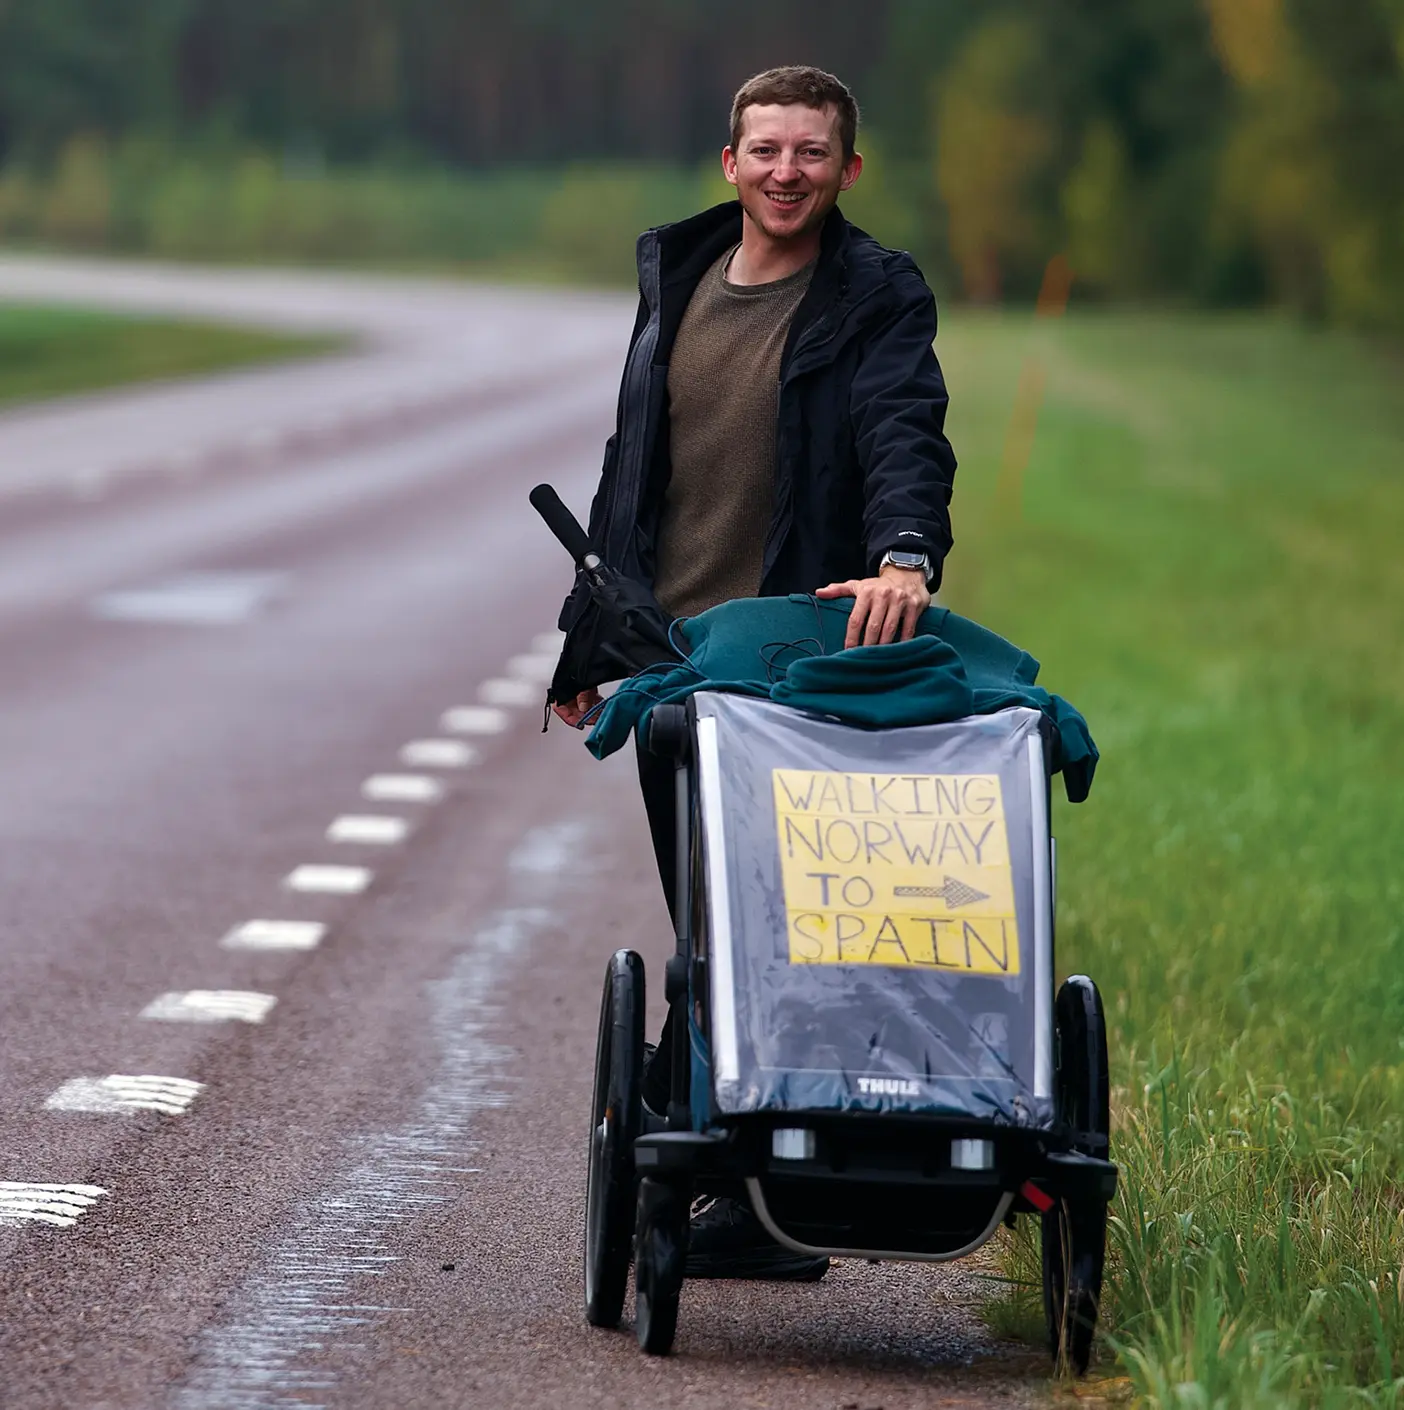 Isaiah Shields on the roadside pushing a cart.